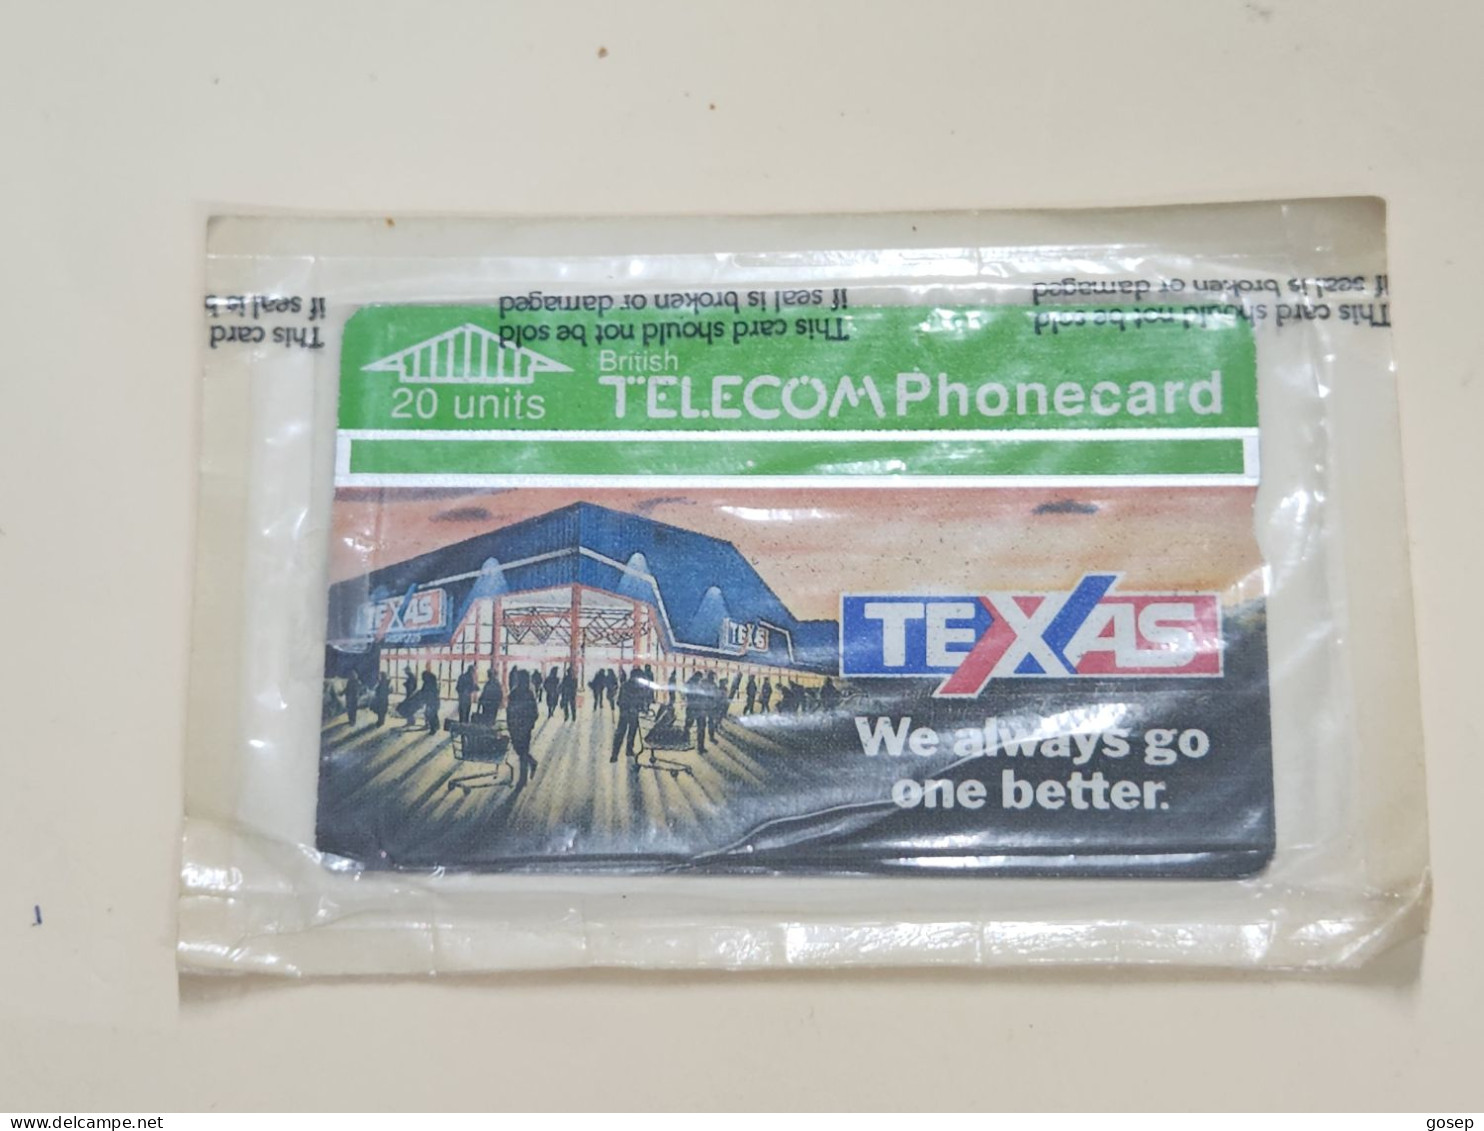 United Kingdom-(BTA015)-TEXAS HOMECARE-(20units)-(37)-(cod Inclosed)-price Cataloge8.00£-mint-card+1card Prepiad Free - BT Advertising Issues